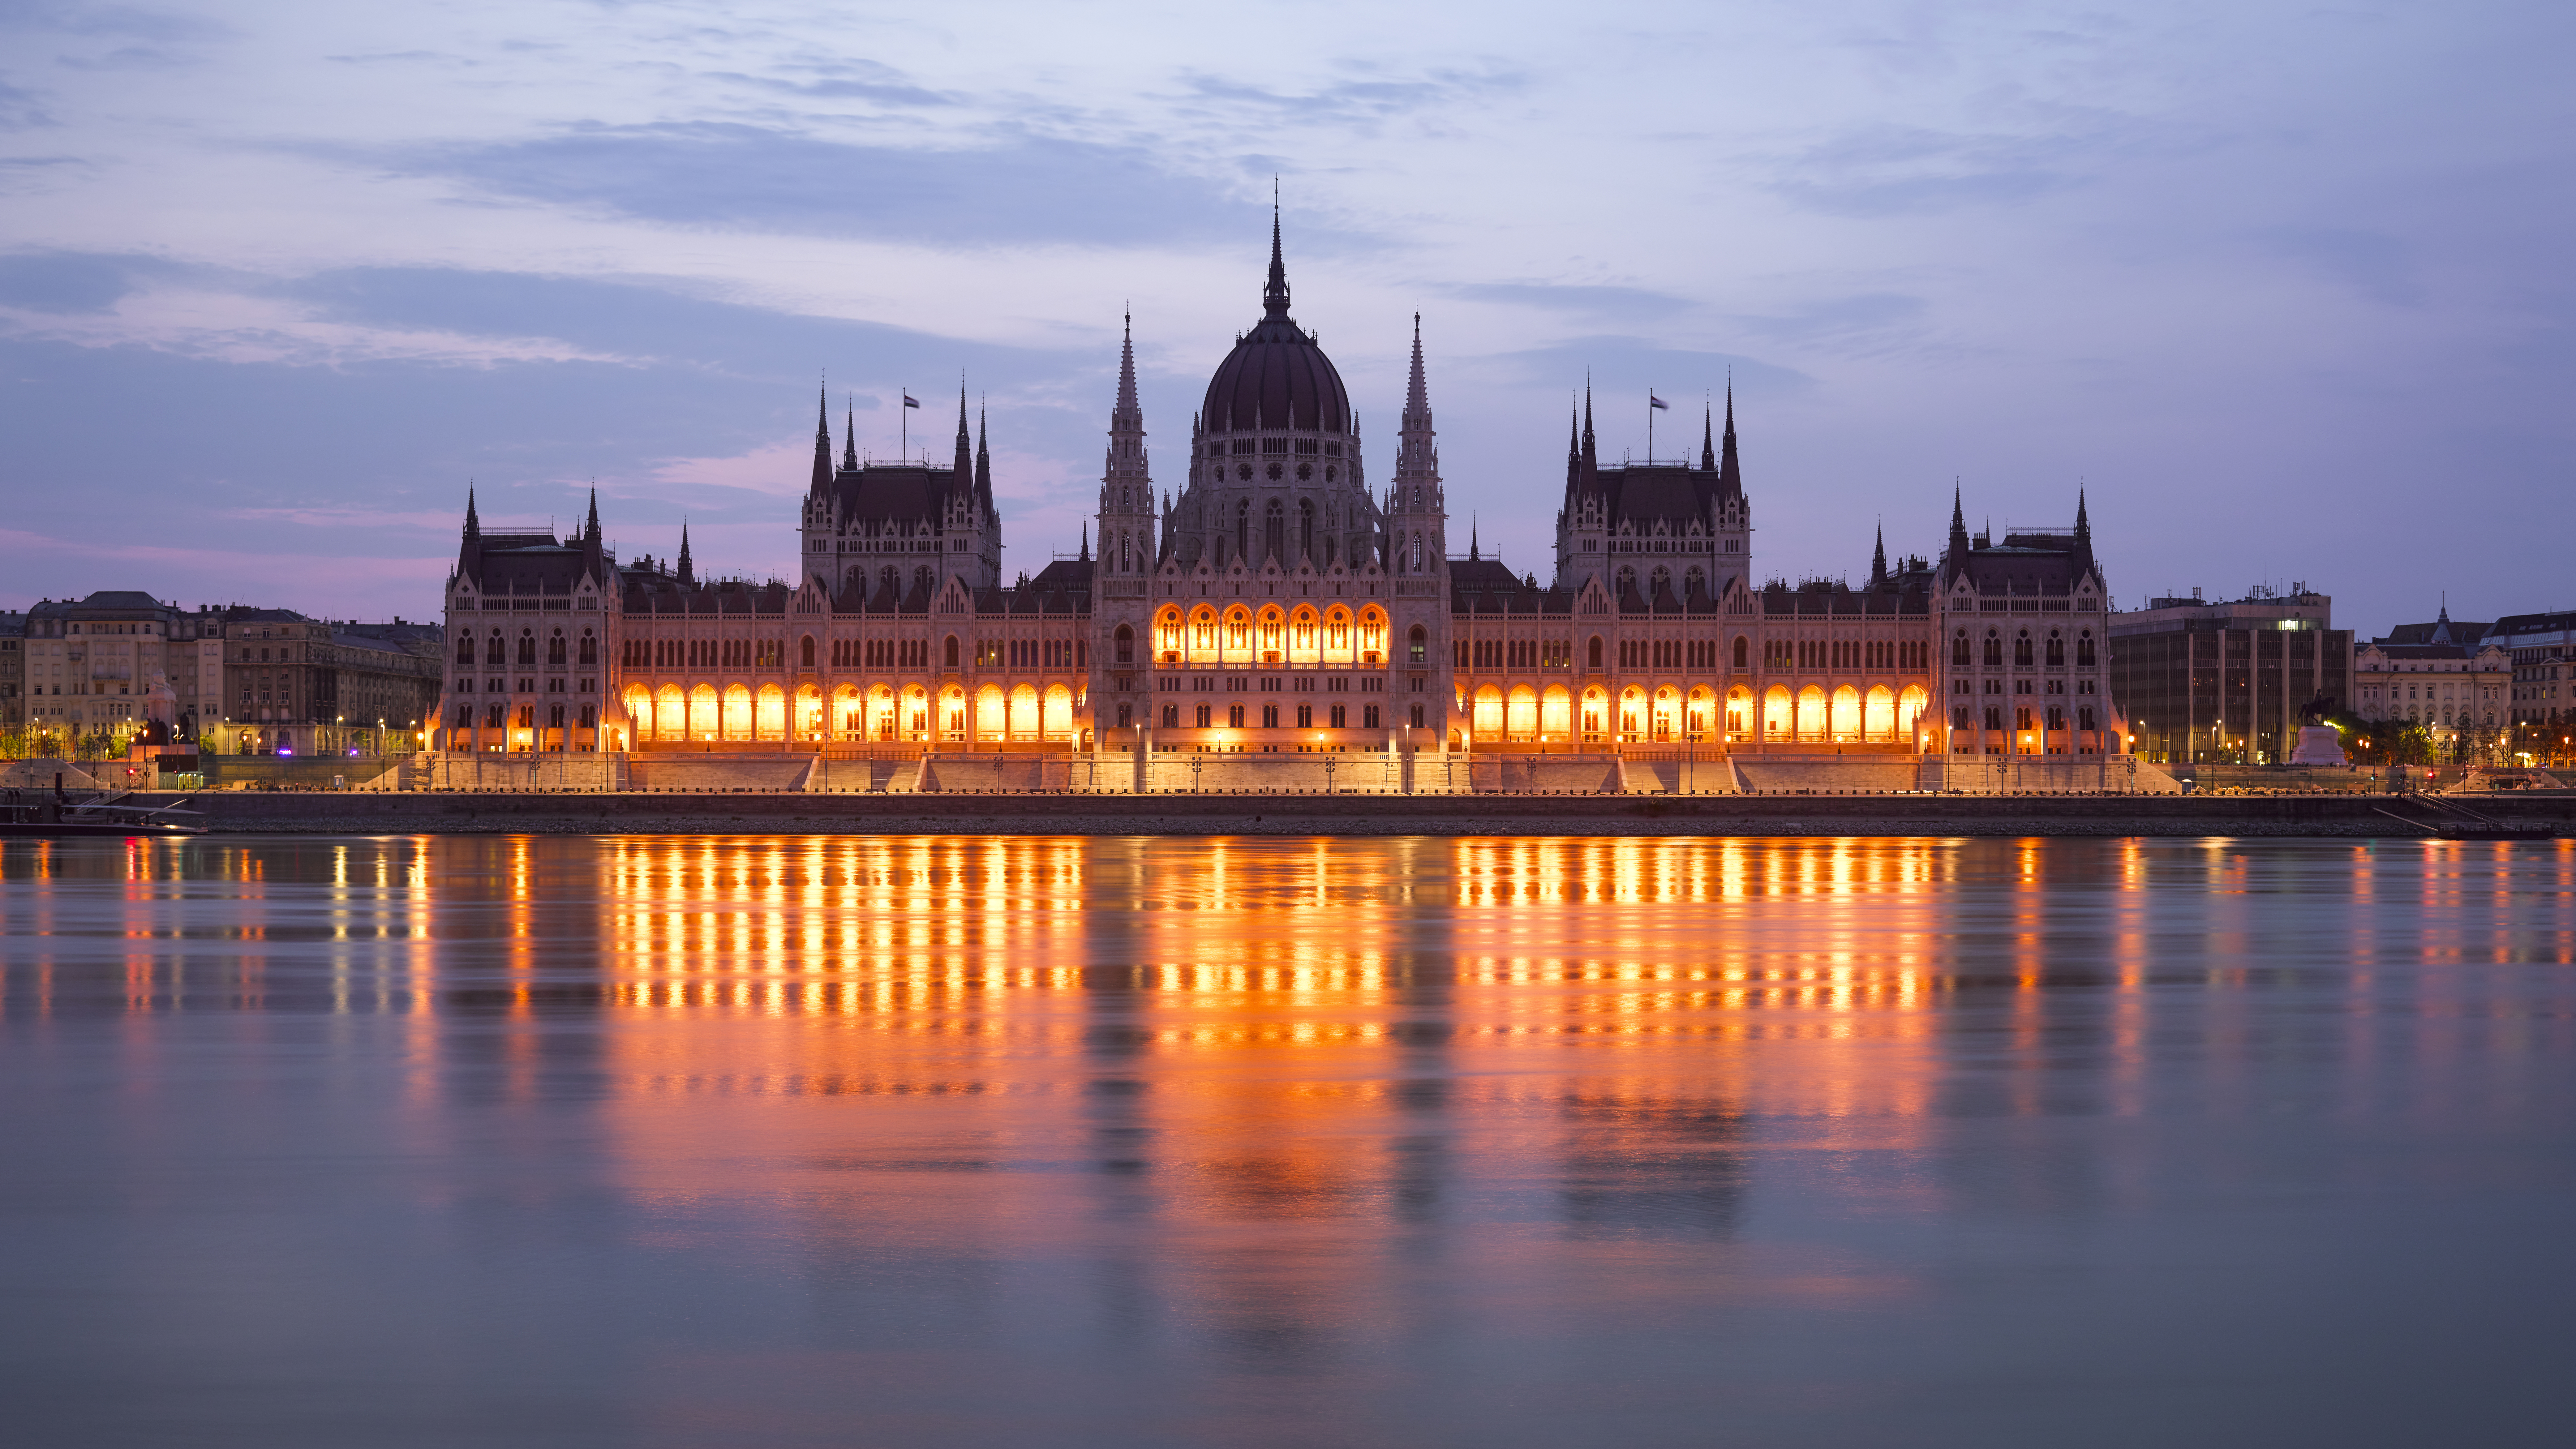 Hungarian Parliament Building - Wikipedia